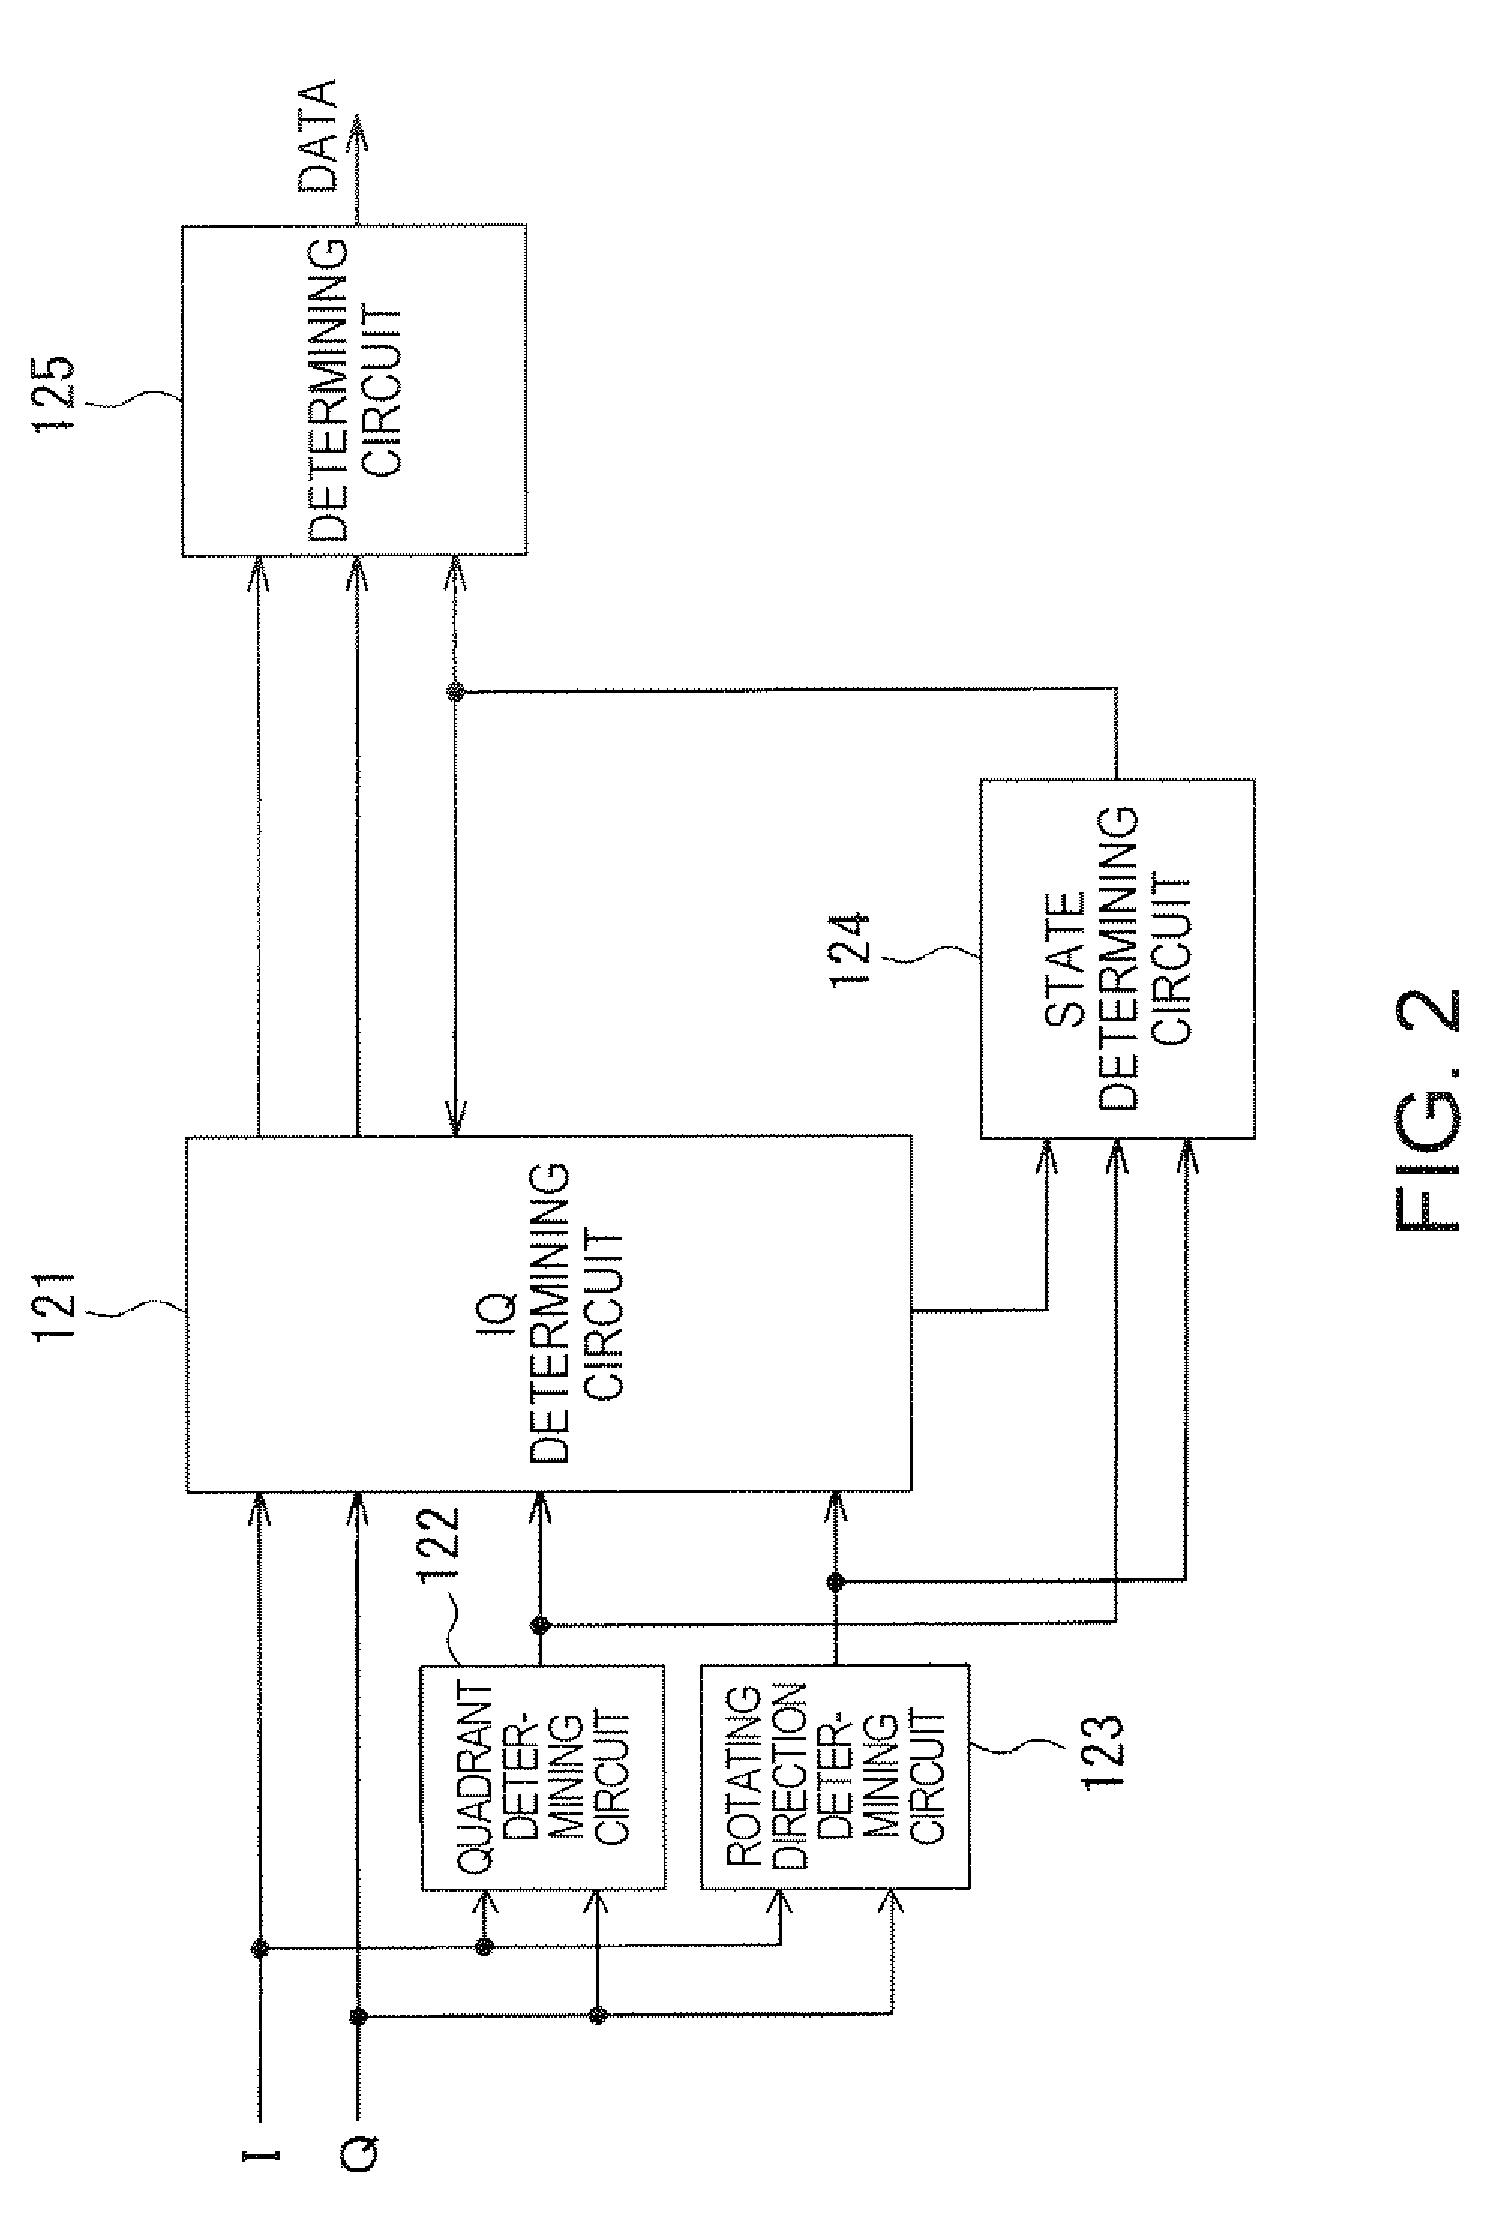 PSK receiver, PSK demodulating circuit, communication apparatus, and PSK receiving method